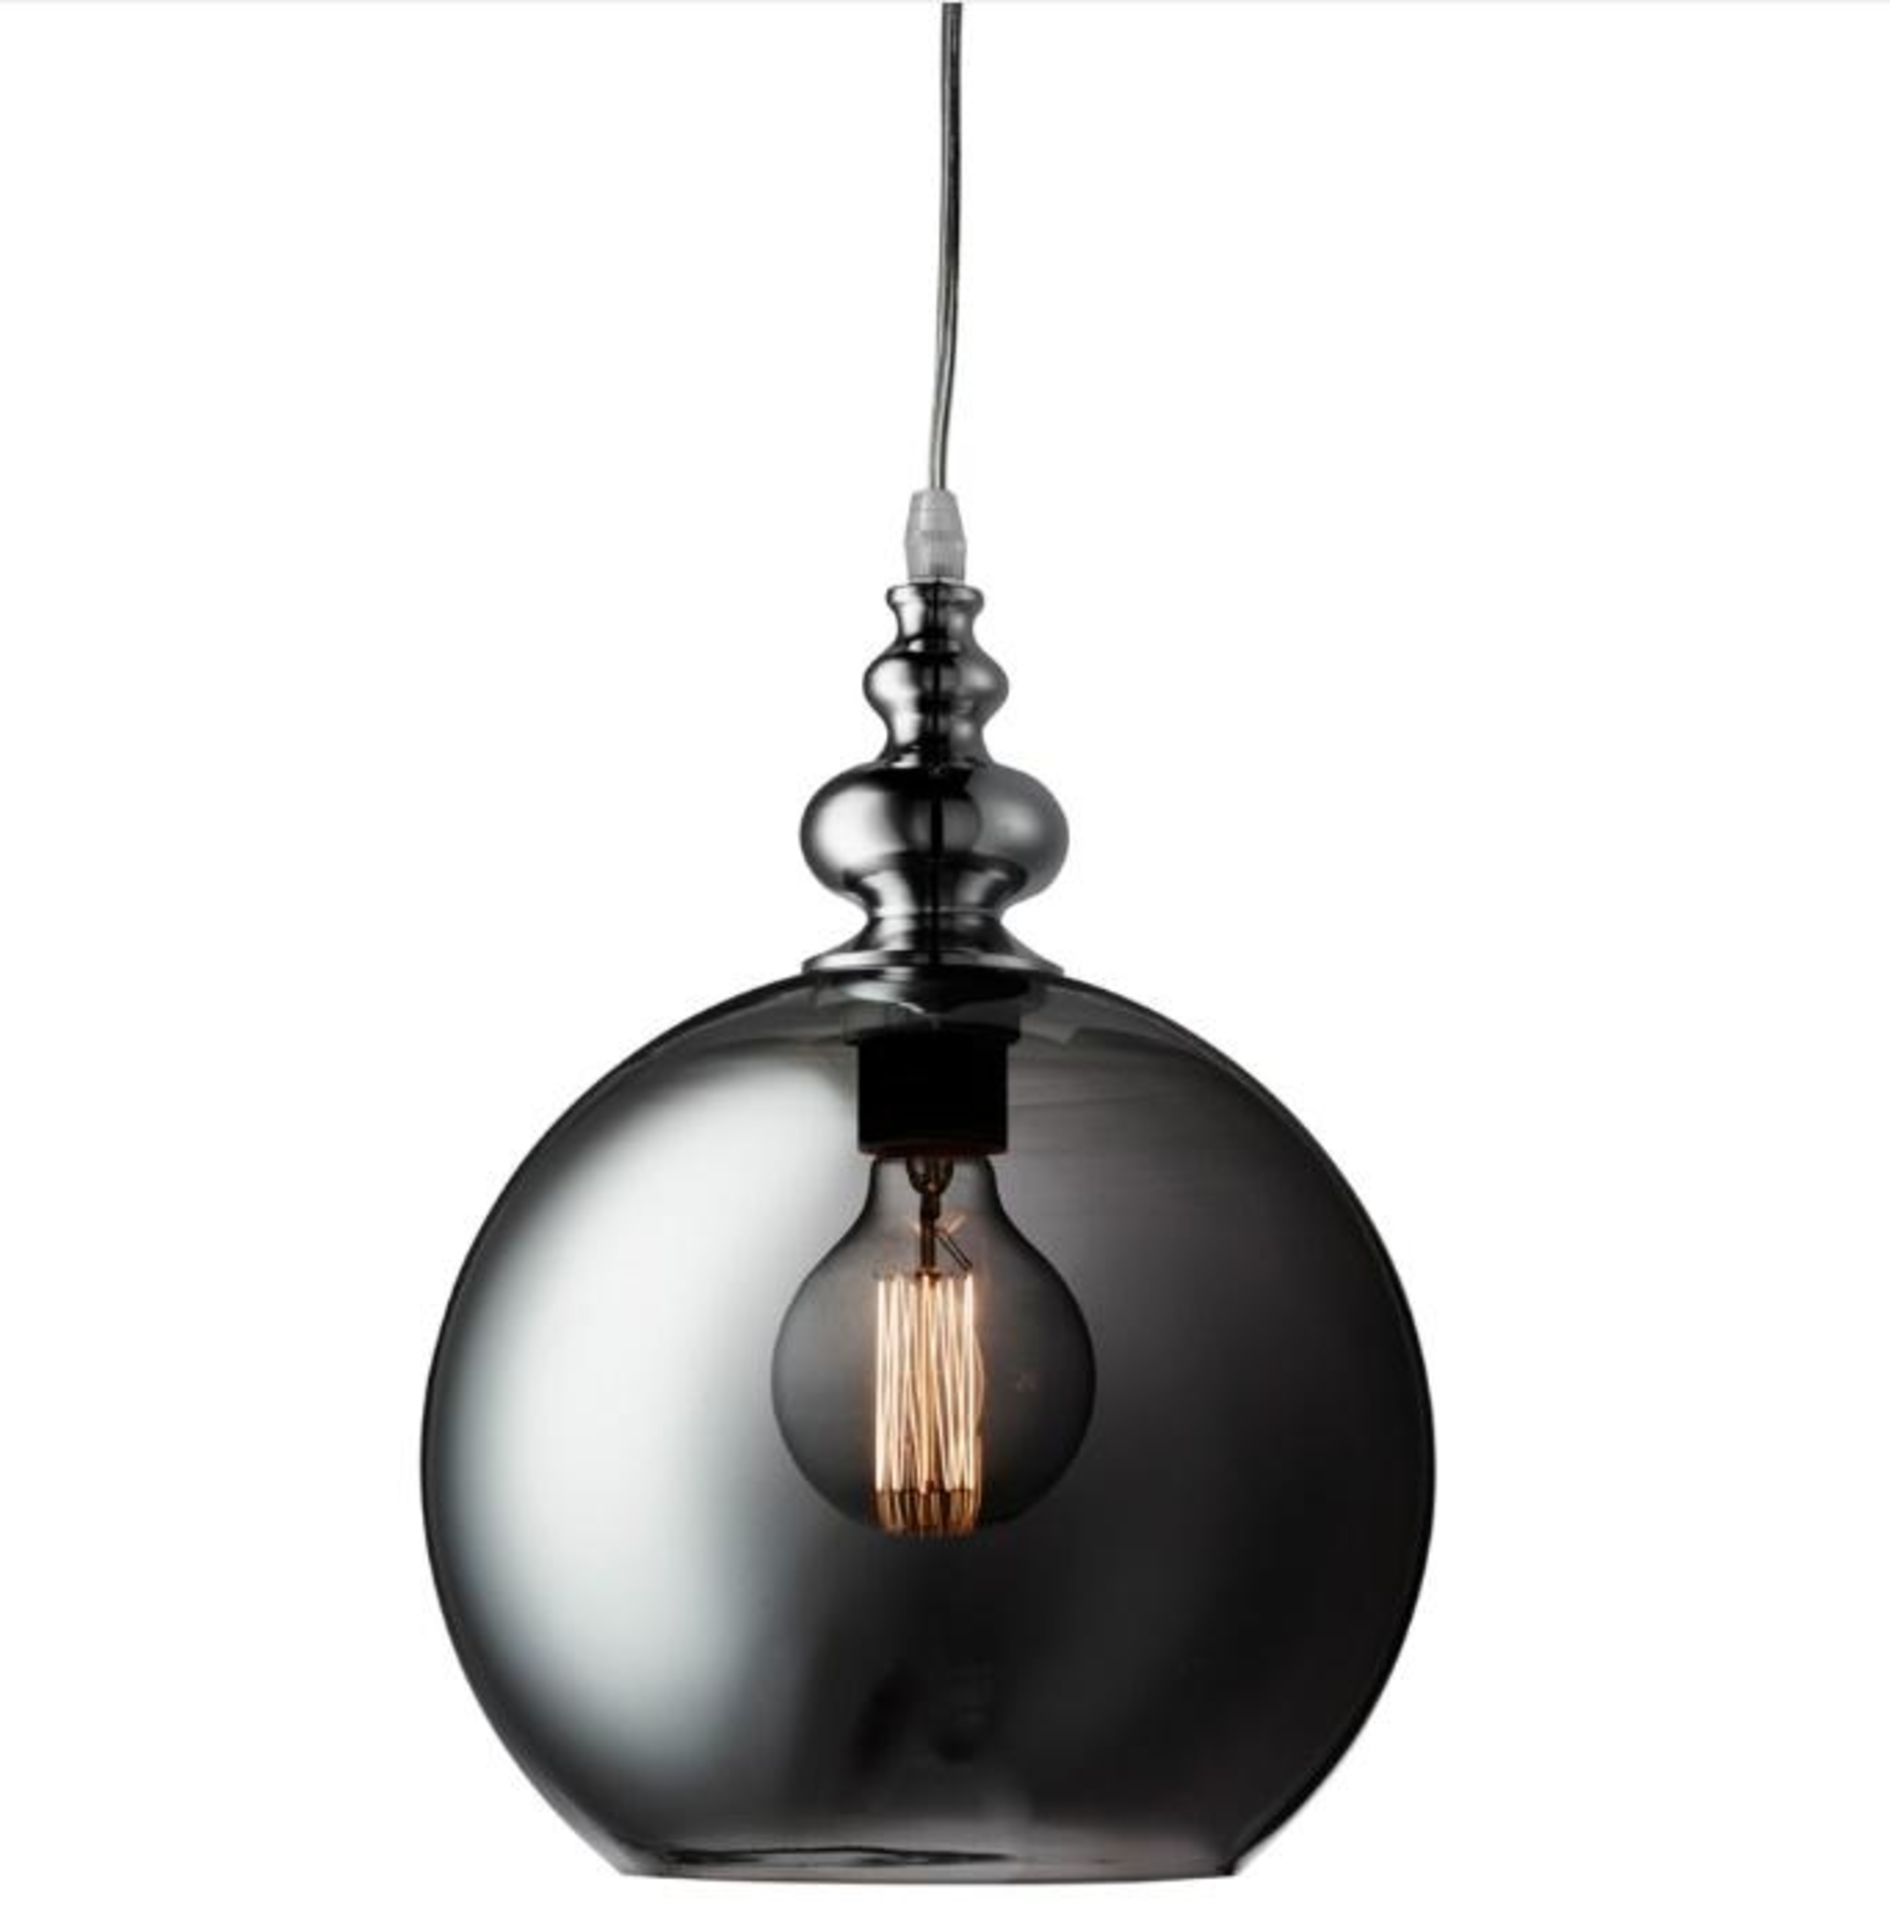 2 x Indiana Chrome Globe Pendant Light With Smokey Glass Glade - Ex Display Stock - CL323 - Ref: 202